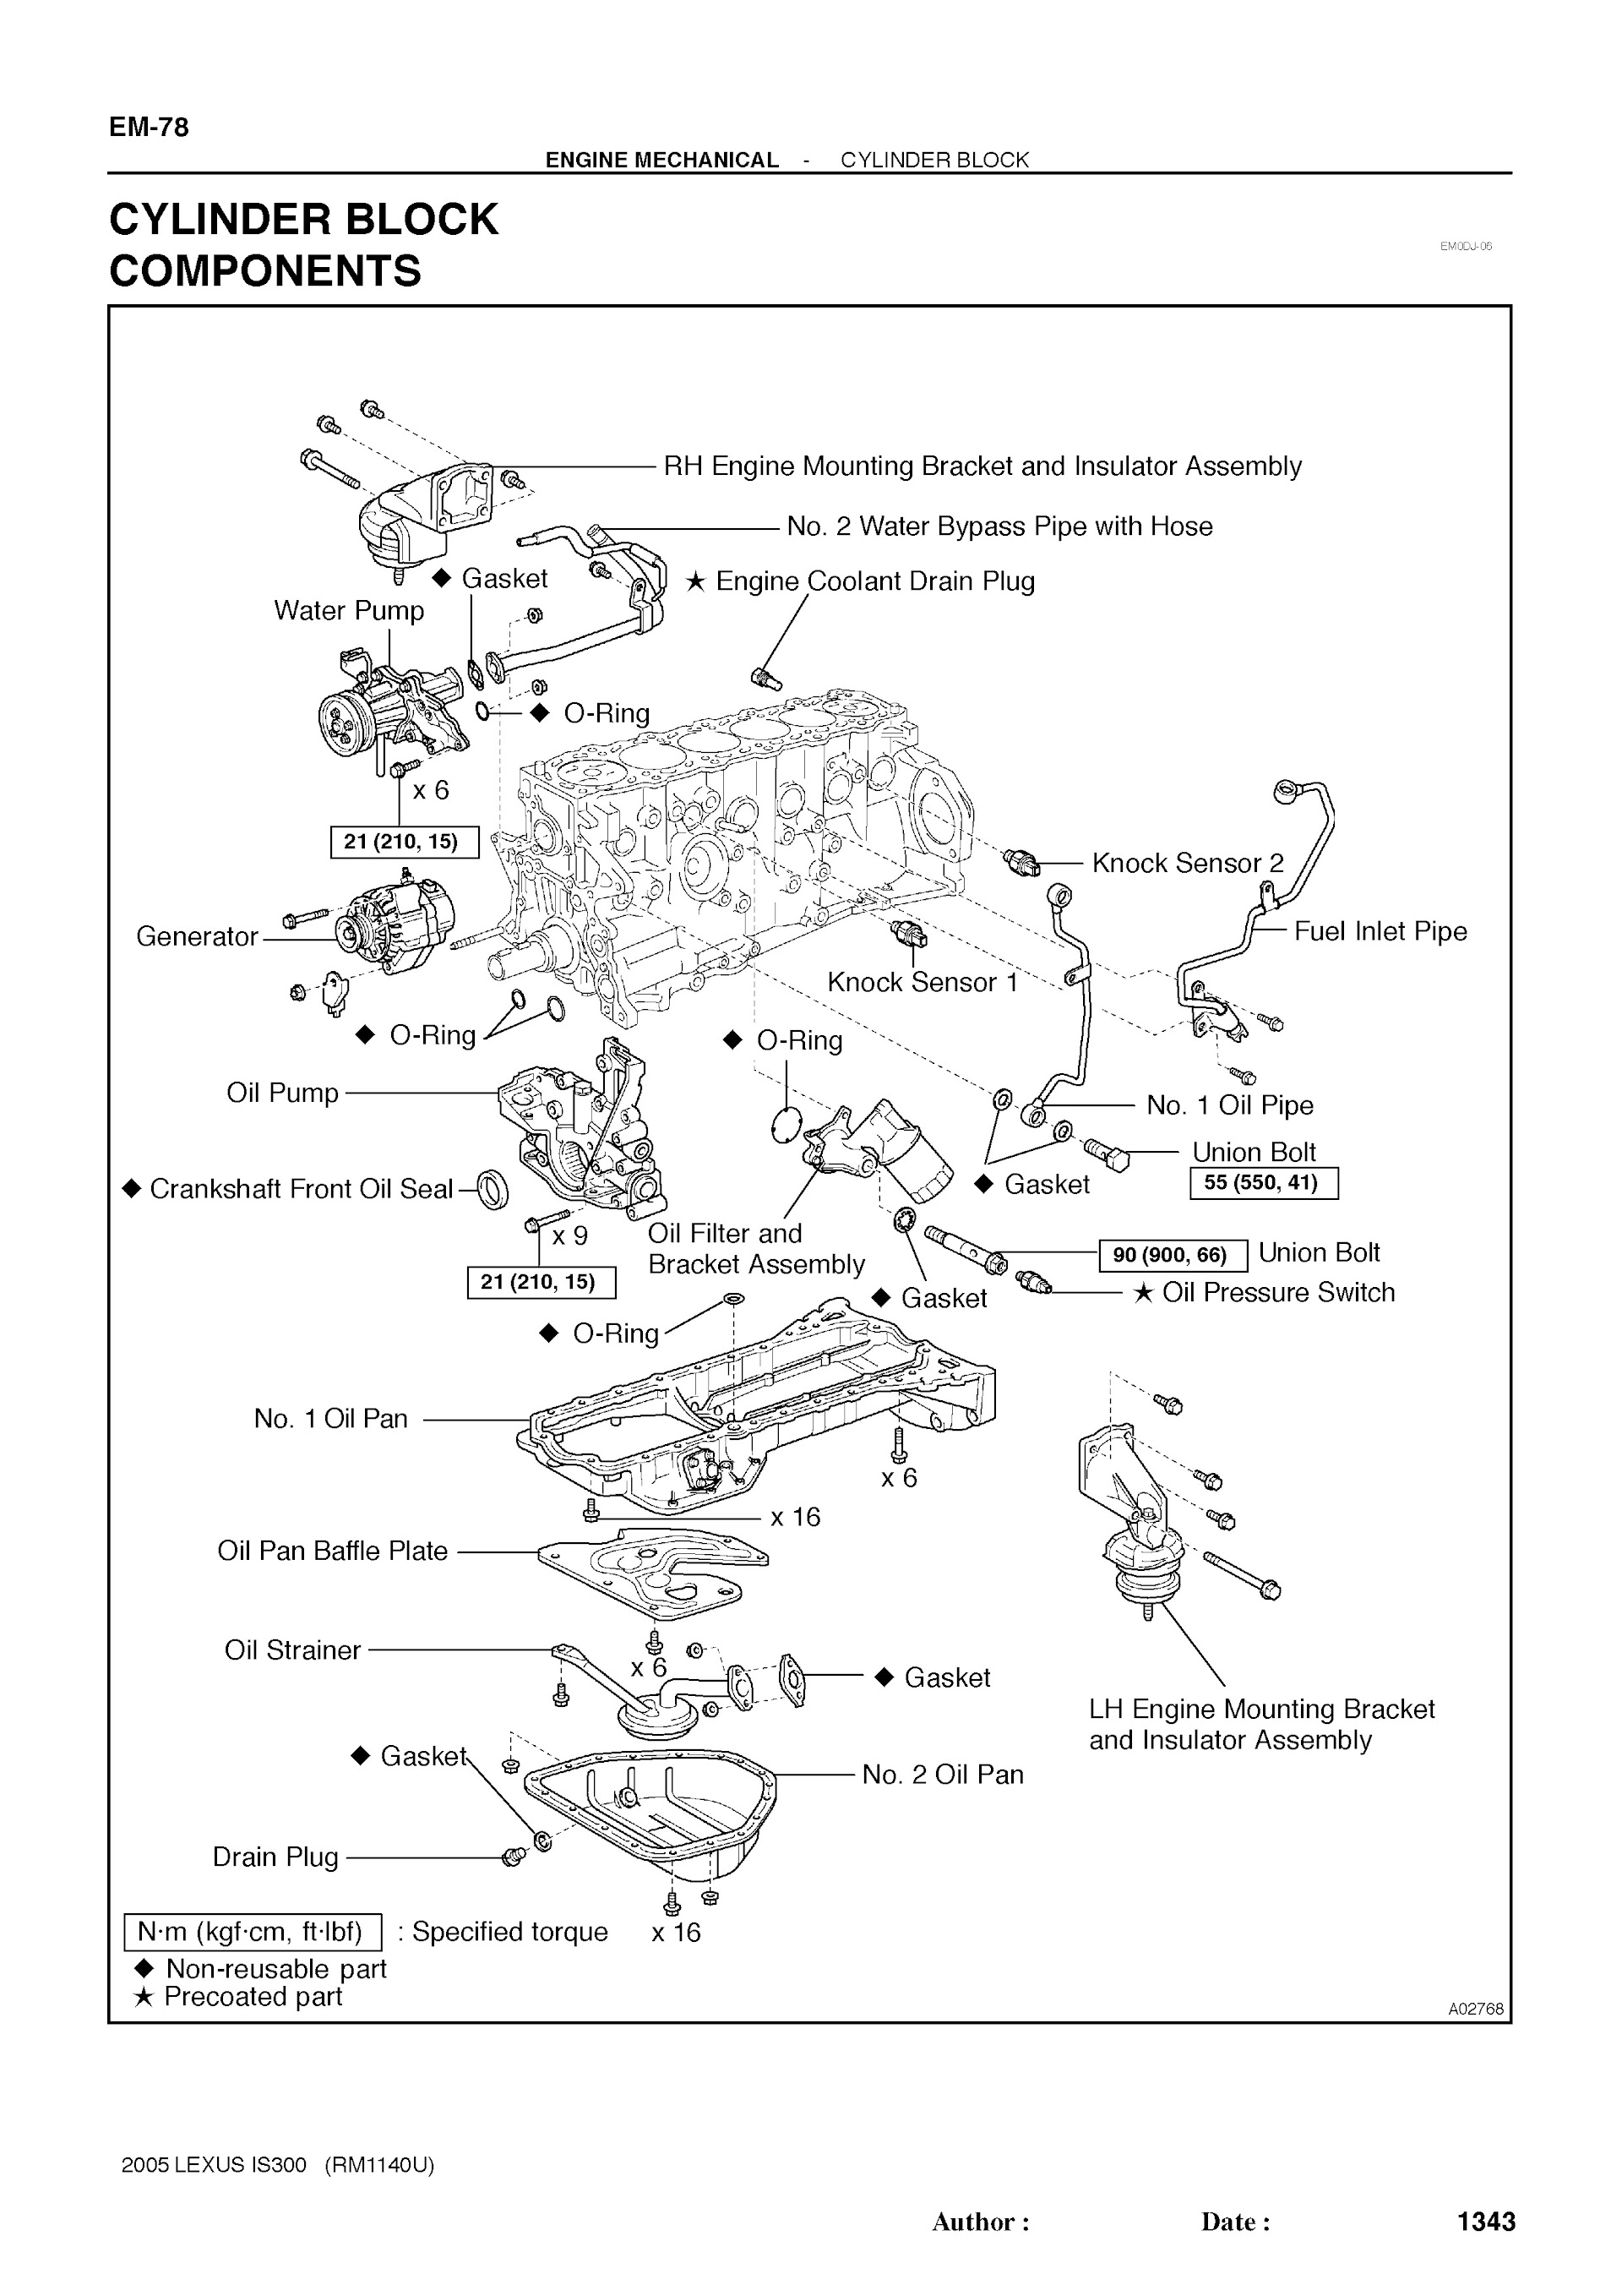 2005 Lexus IS300 Repair Manual Engine Mechanical Cylinder Block